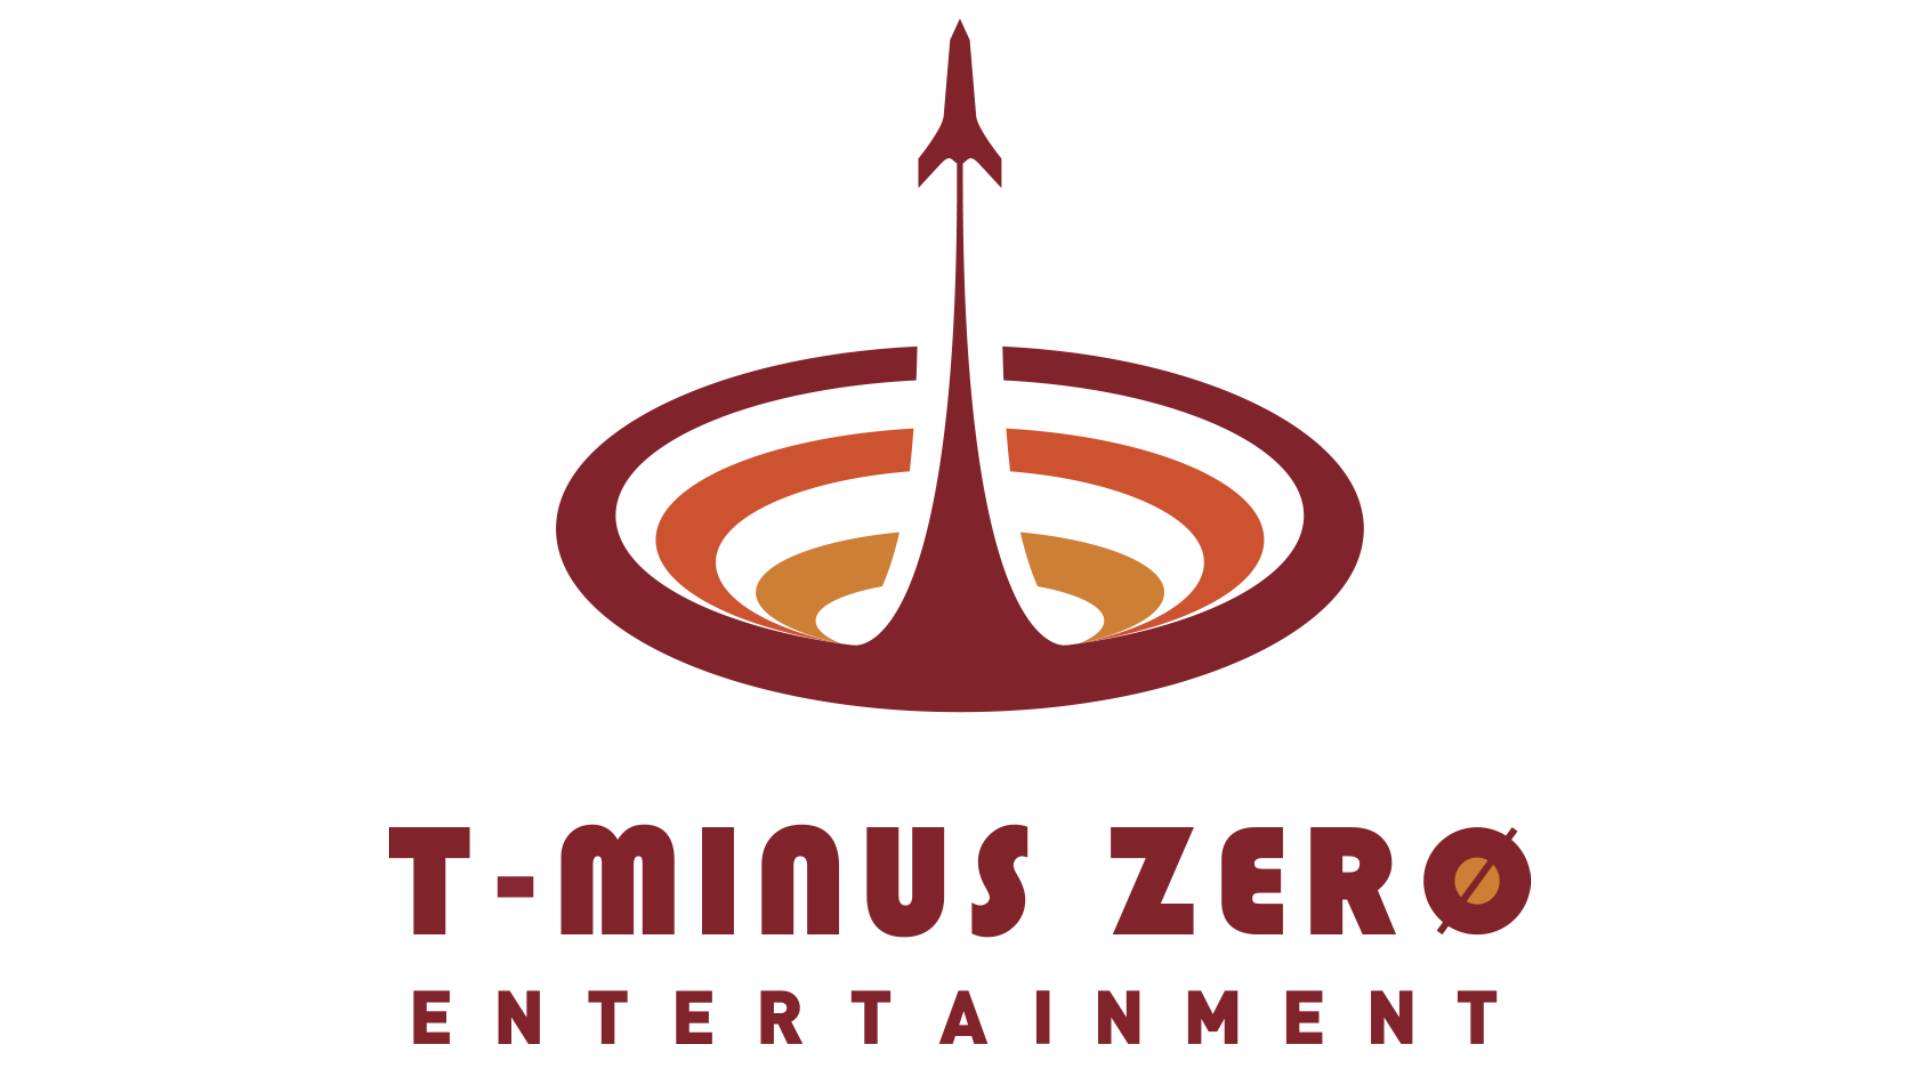 NetEase Games Announces T-Minus Zero Entertainment; Studio Led By Rich Vogel Creating a Third-Person Online Sci-Fi Action Game